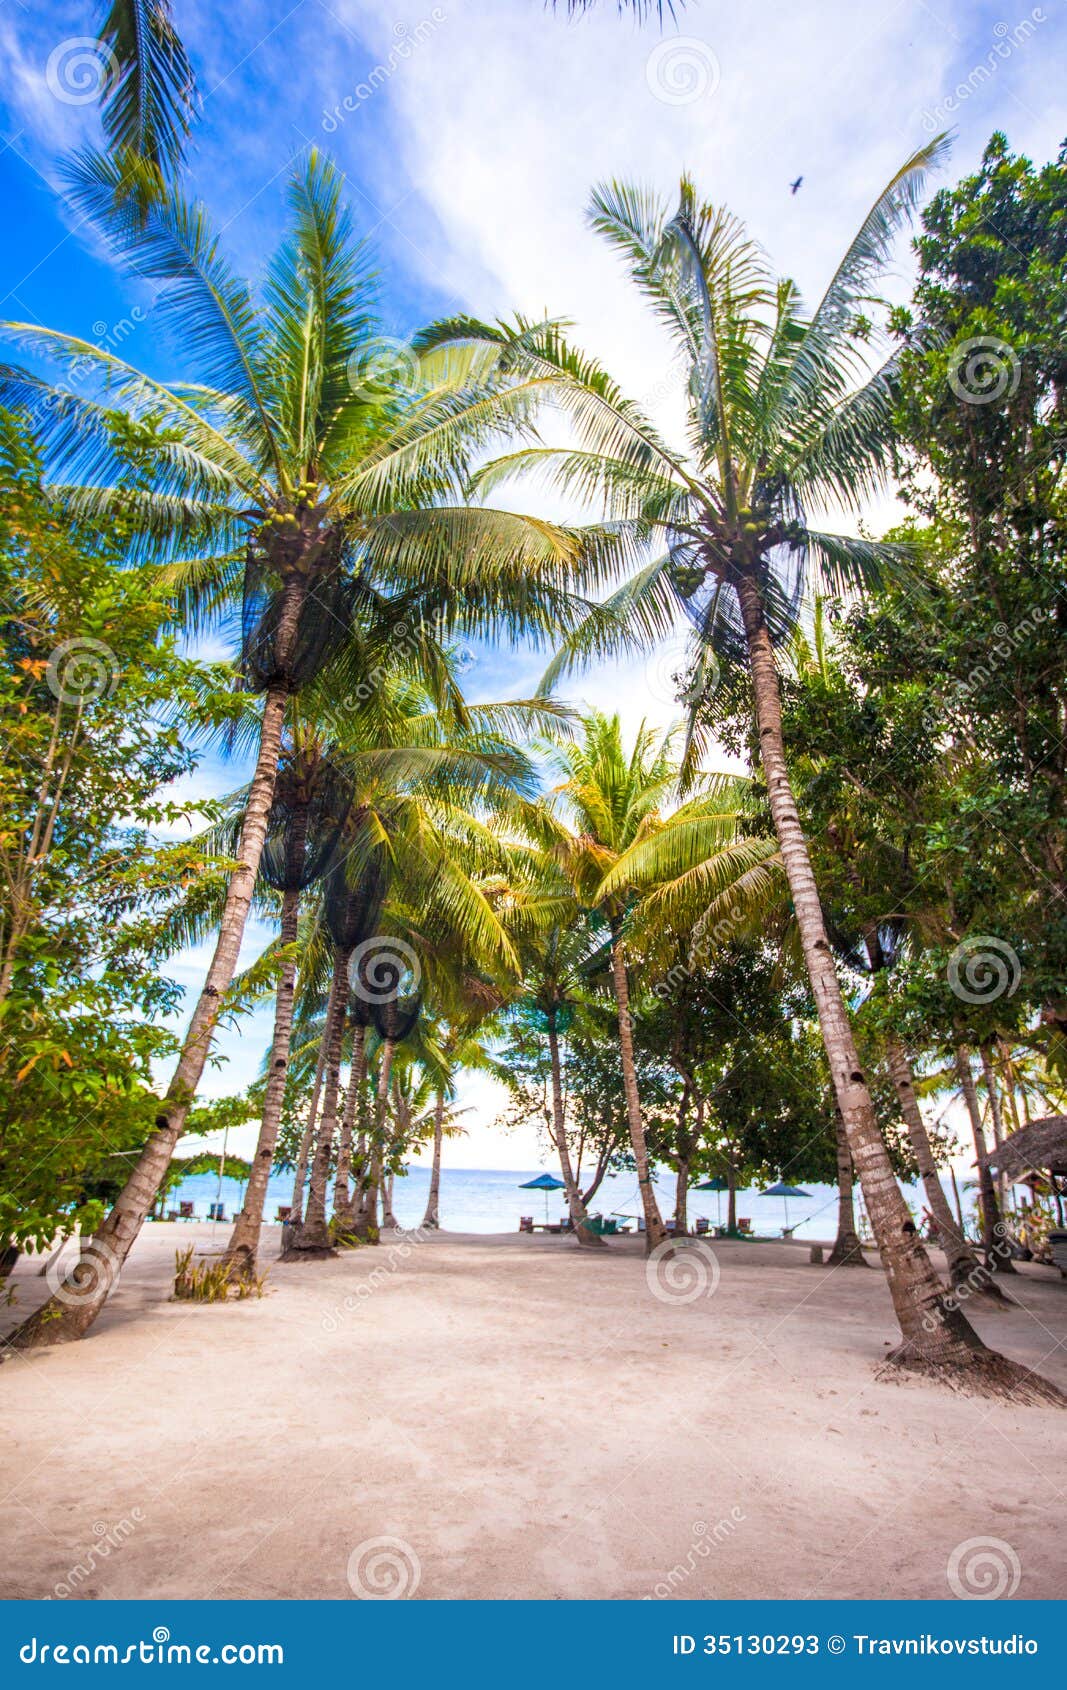 Tropical Sunny Beach in Beautiful Exotic Resort Stock Image - Image of ...